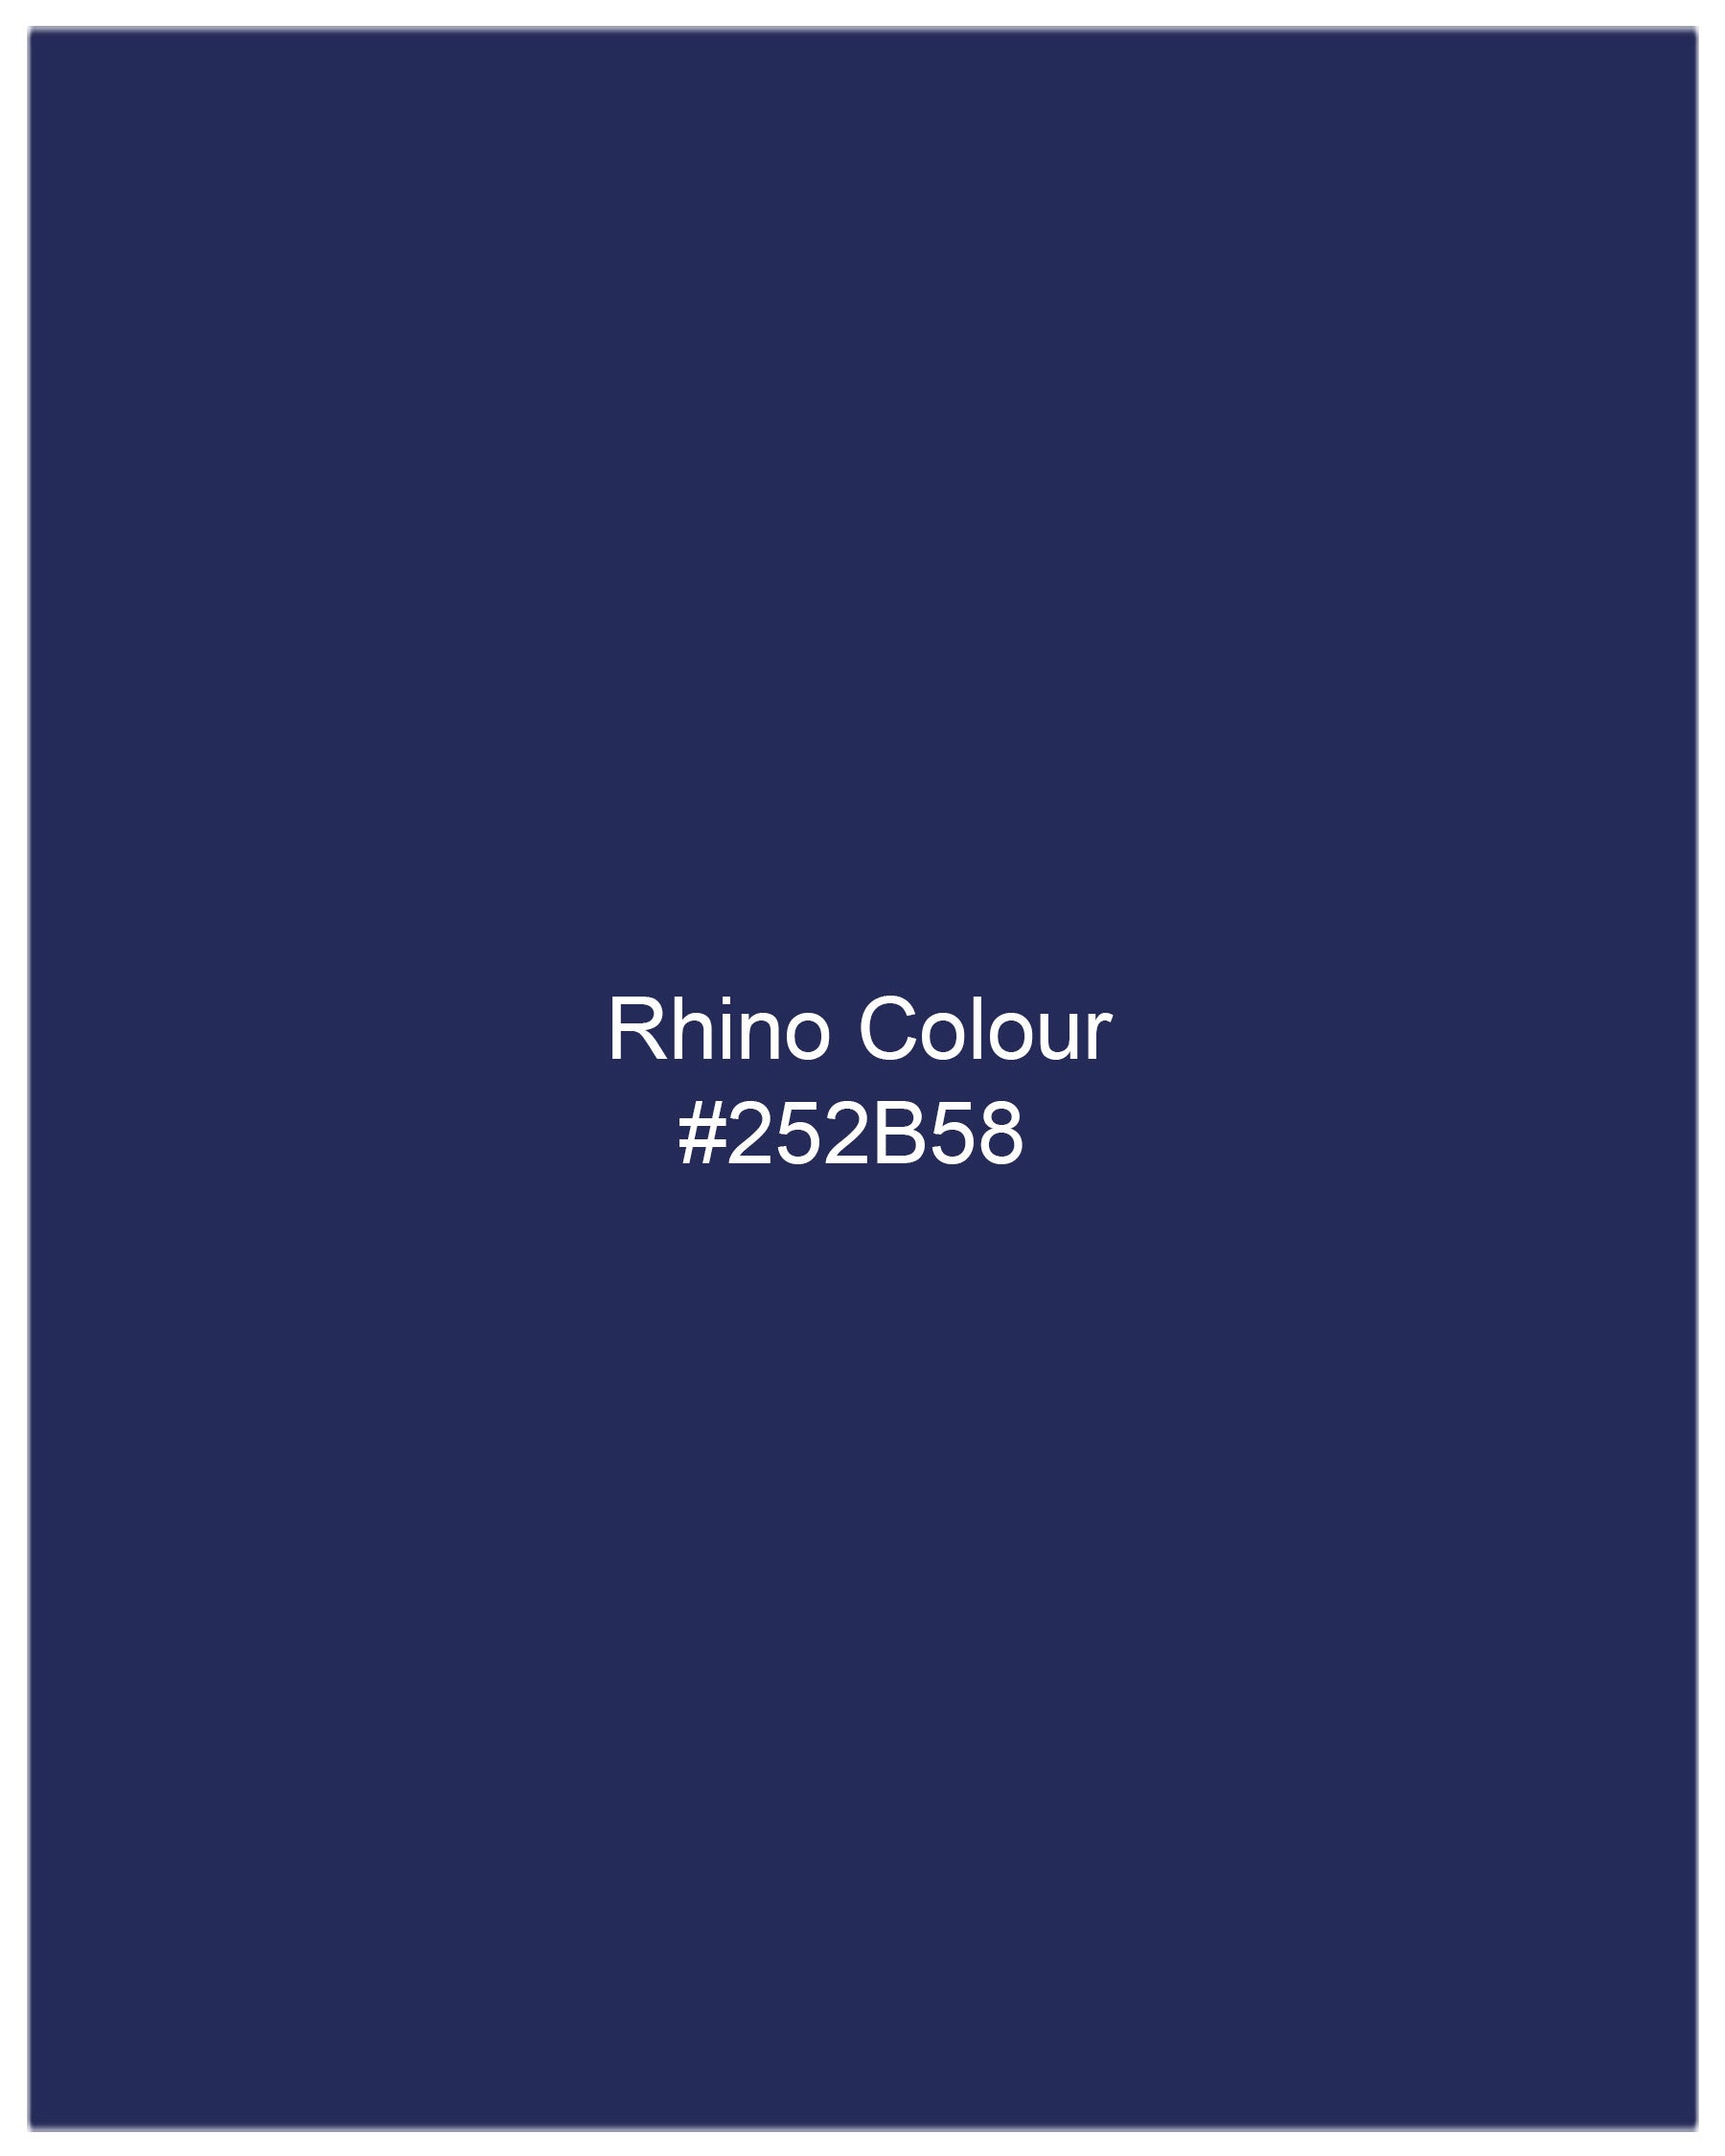 Rhino Blue Single Breasted Blazer BL2006-SB-36, BL2006-SB-38, BL2006-SB-40, BL2006-SB-42, BL2006-SB-44, BL2006-SB-46, BL2006-SB-48, BL2006-SB-50, BL2006-SB-52, BL2006-SB-54, BL2006-SB-56, BL2006-SB-58, BL2006-SB-60